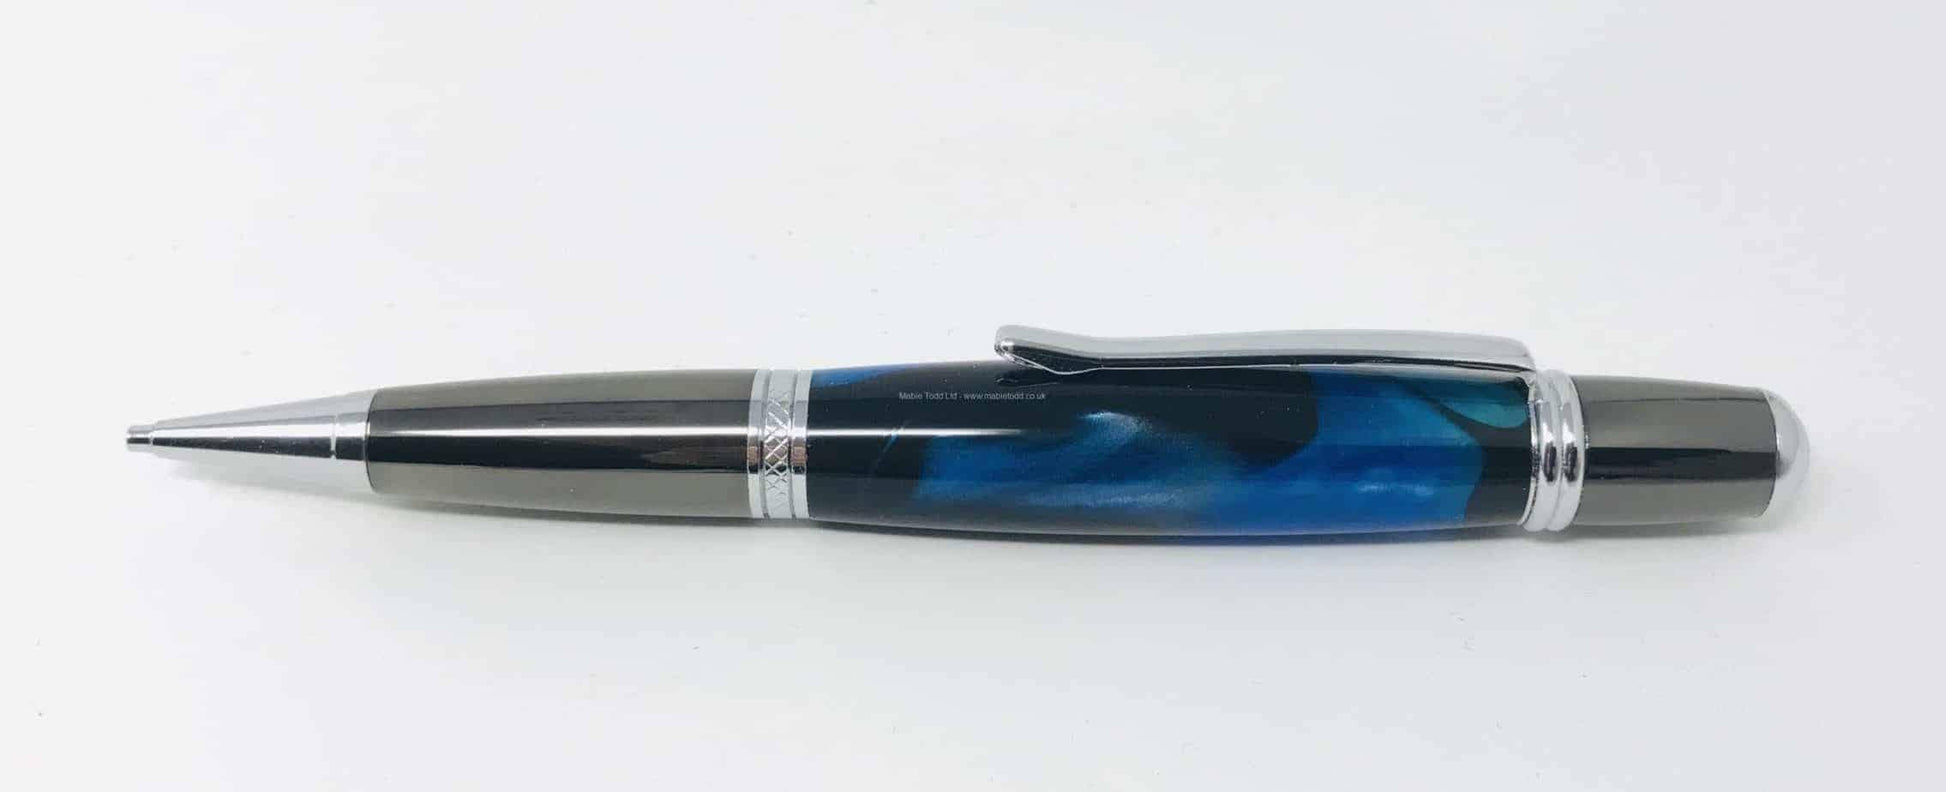 Cerra  Pencil Kit - Chrome + Gun Metal - UK Pen Blanks